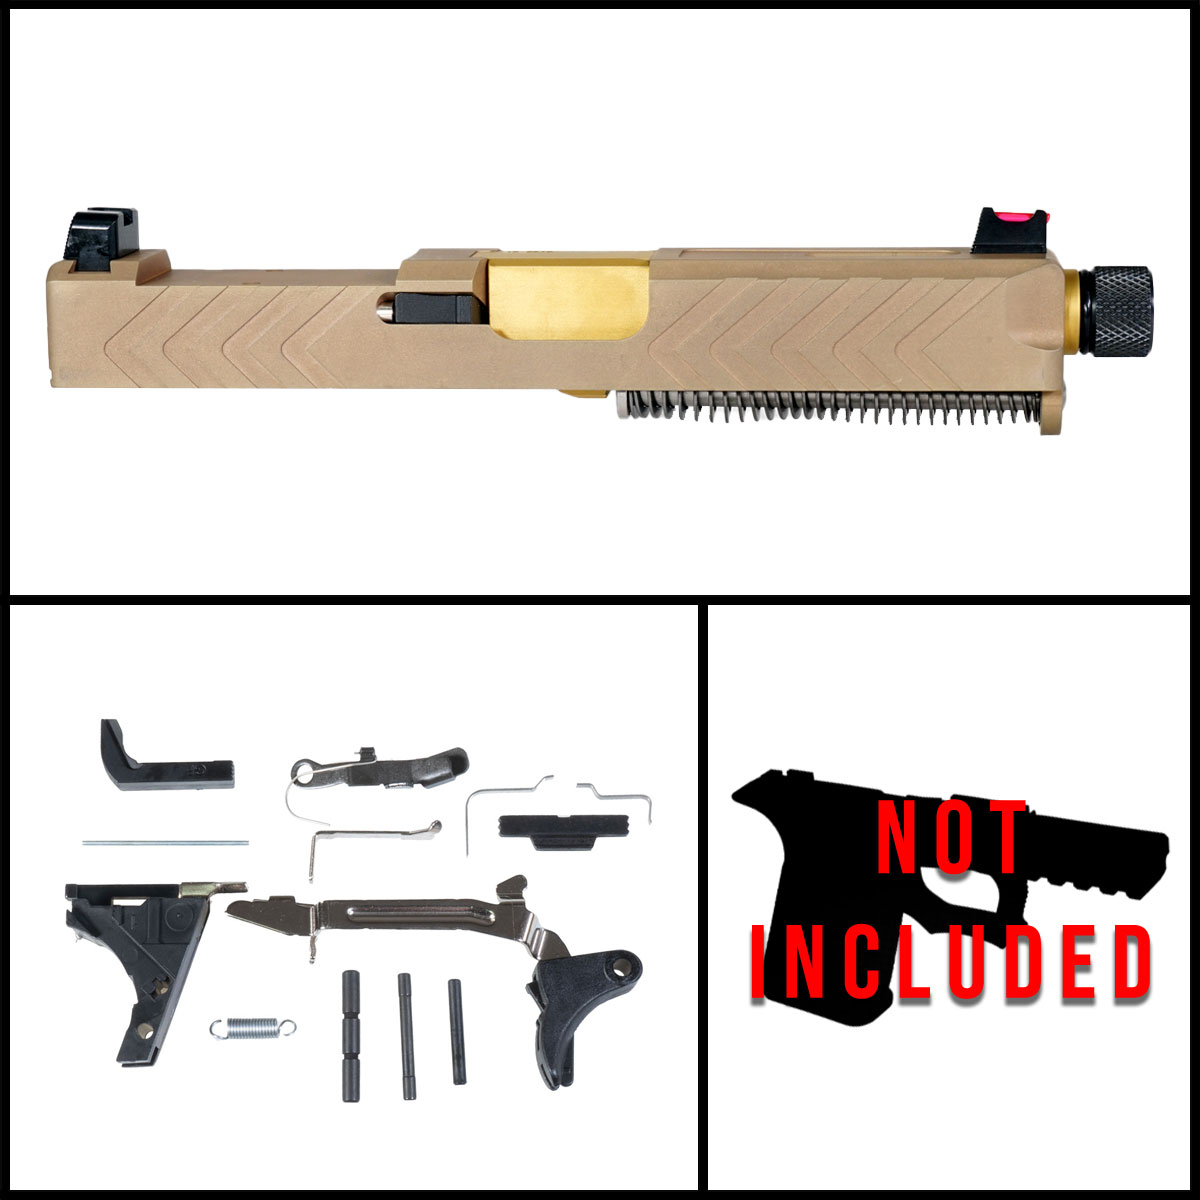 DTT 'Flaco' 9mm Full Pistol Build Kits (Everything Minus Frame) - Glock 19 Gen 1-3 Compatible